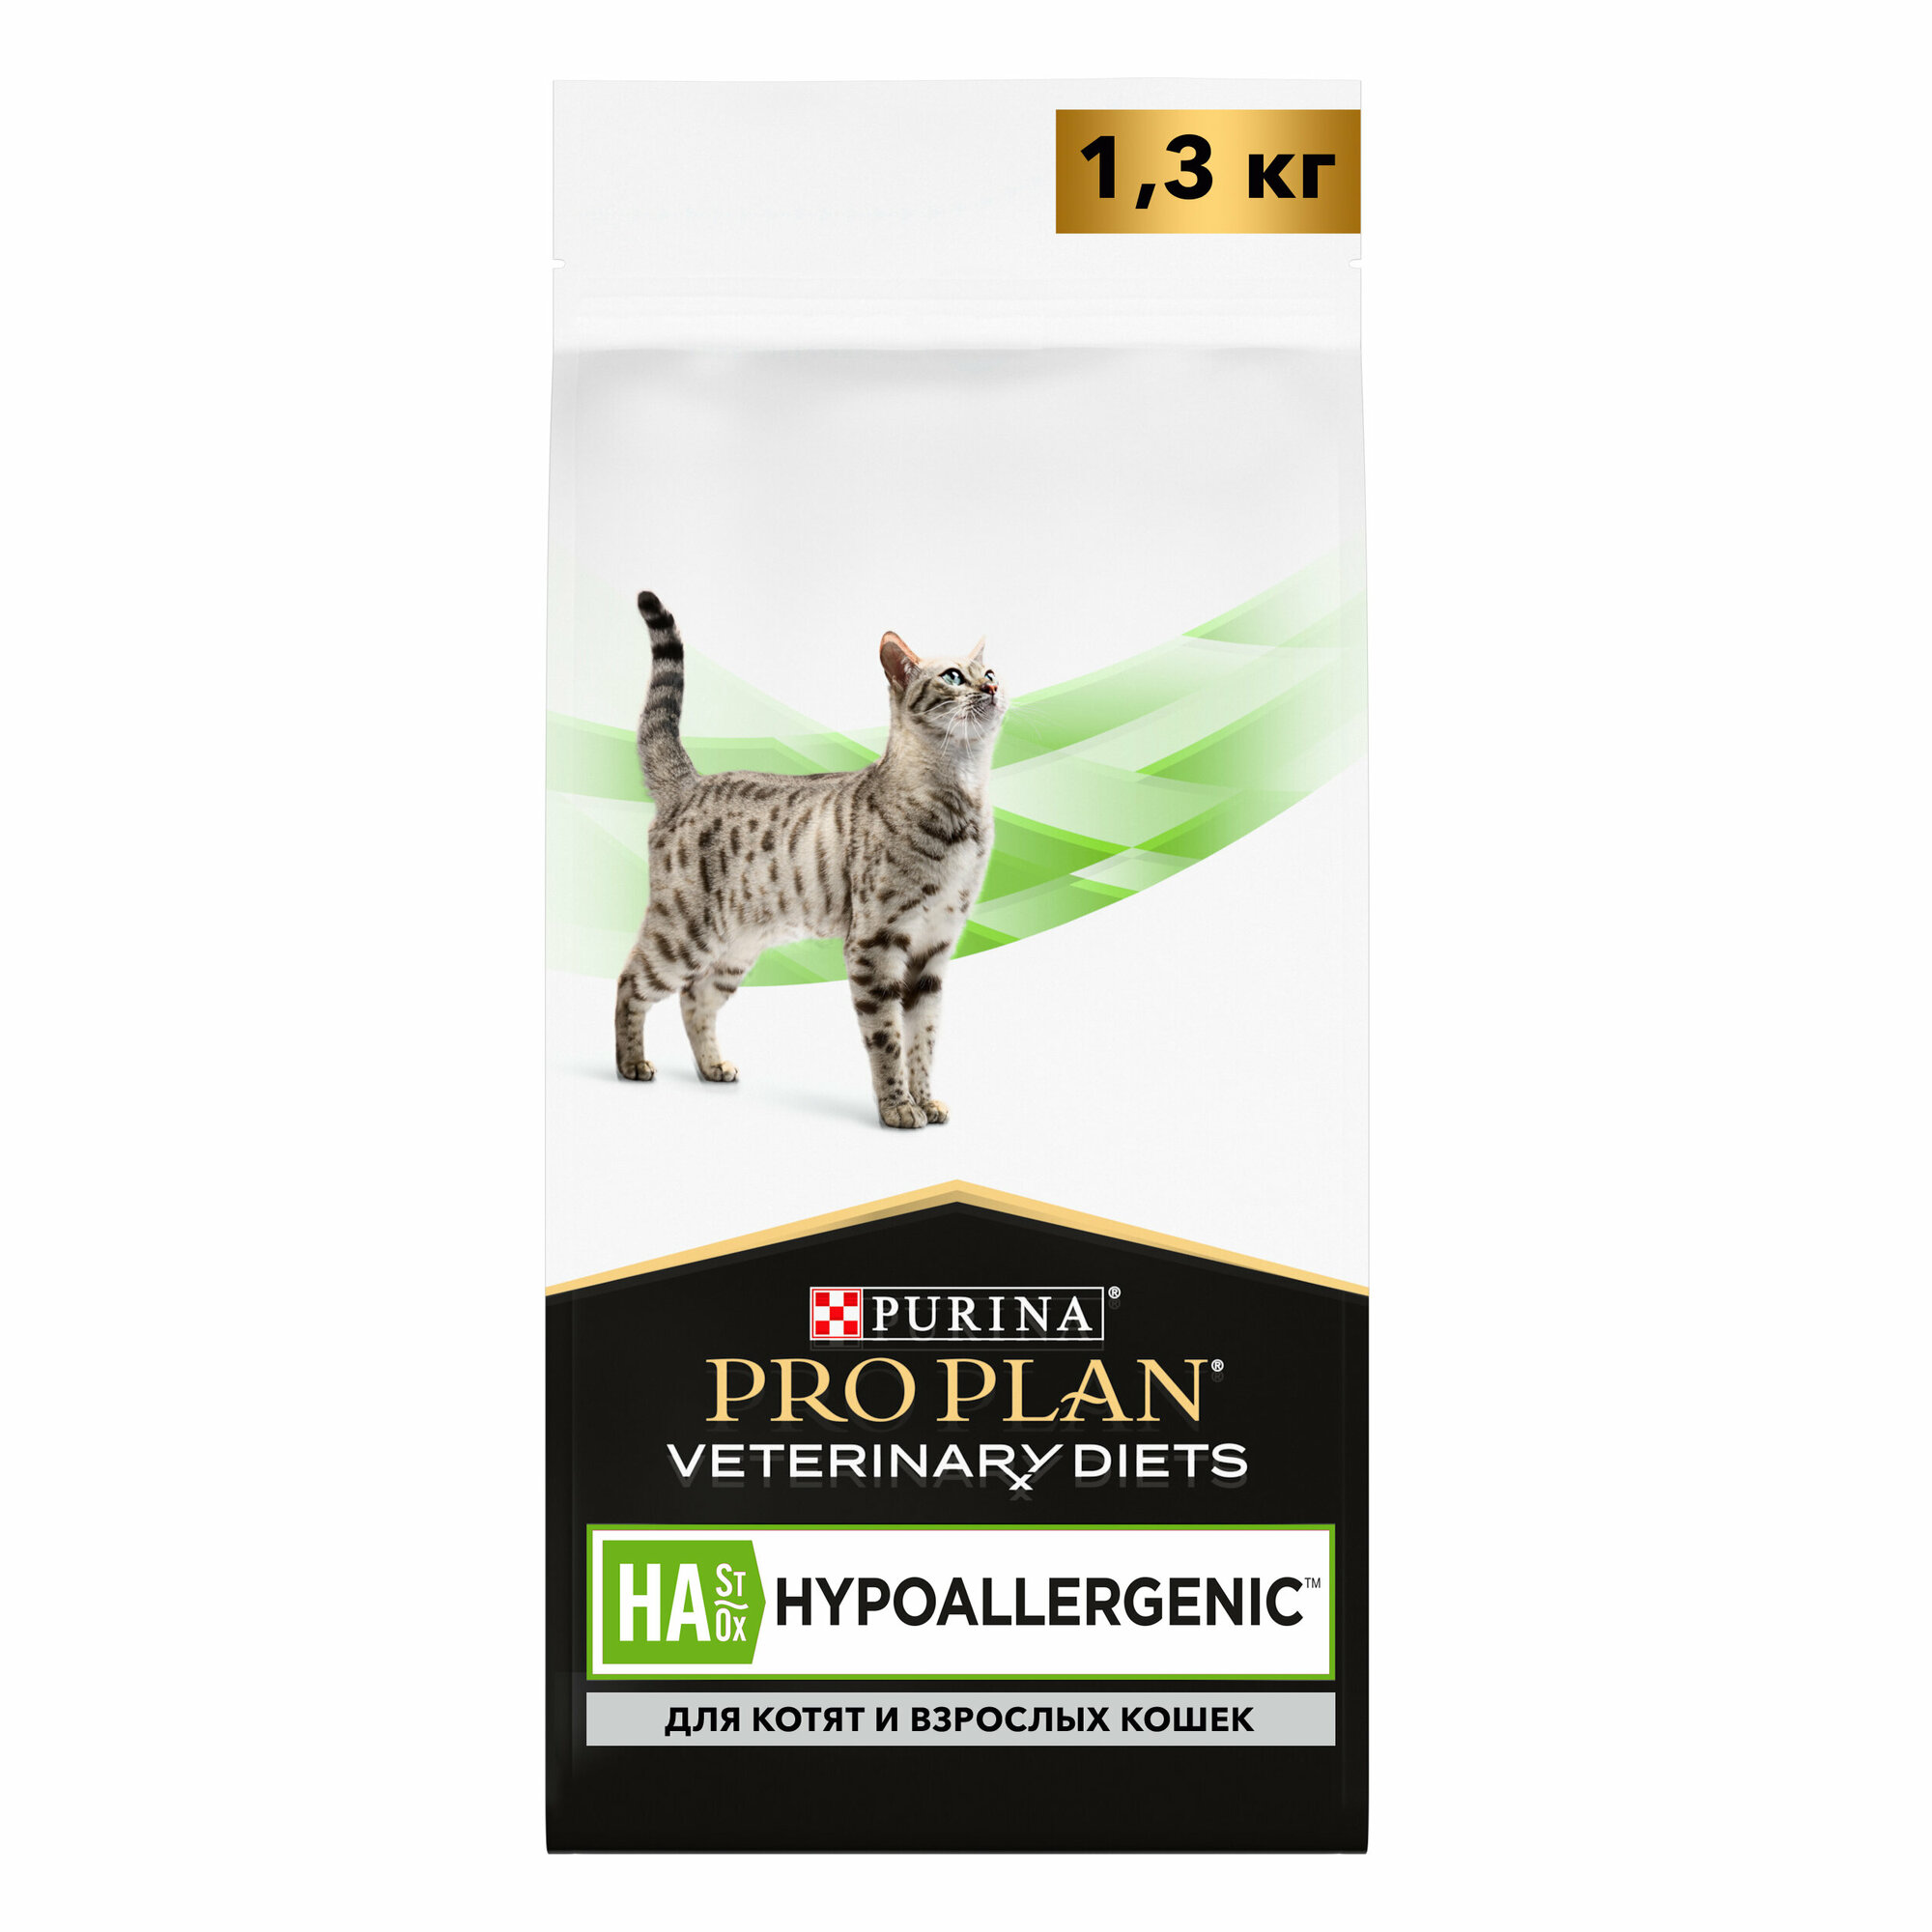 Purina Pro Plan (Пурина Про План) Veterinary Diets VD HA Hypoallergenic Сухой лечебный корм для кошек гипоаллергенный 1,3 кг